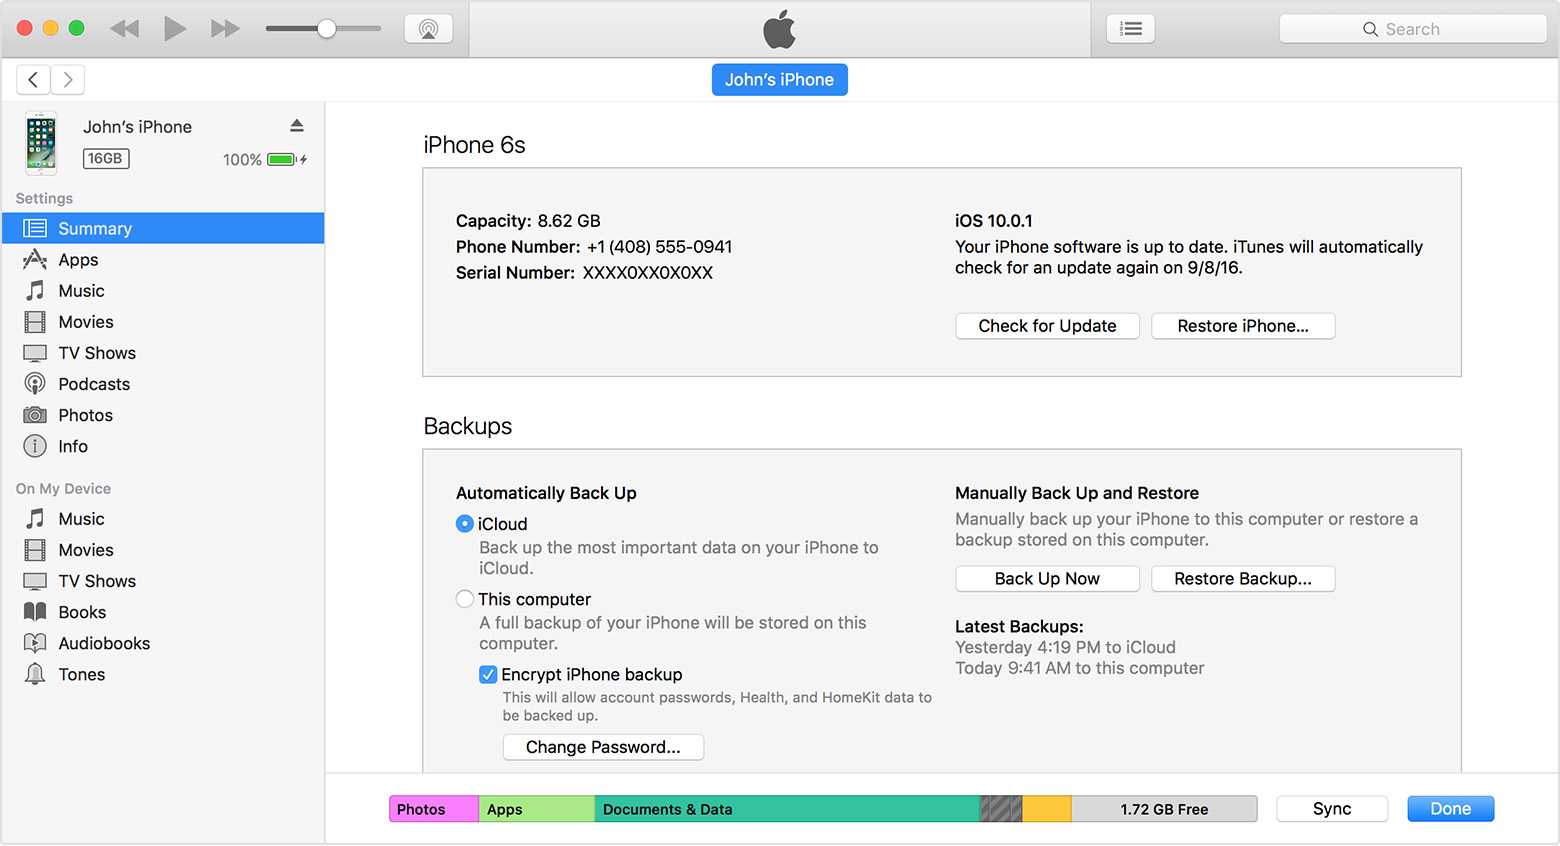 Copia de seguridad iPhone iTunes paso 4